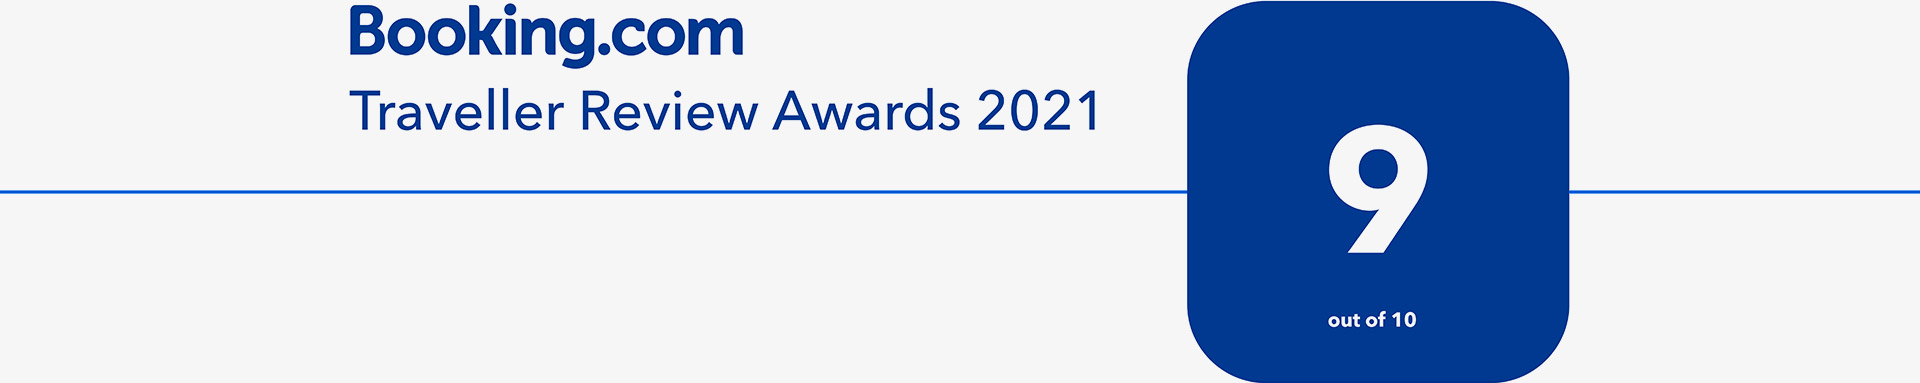 Traveller Review Award 2021 mit 9 auf Booking.com